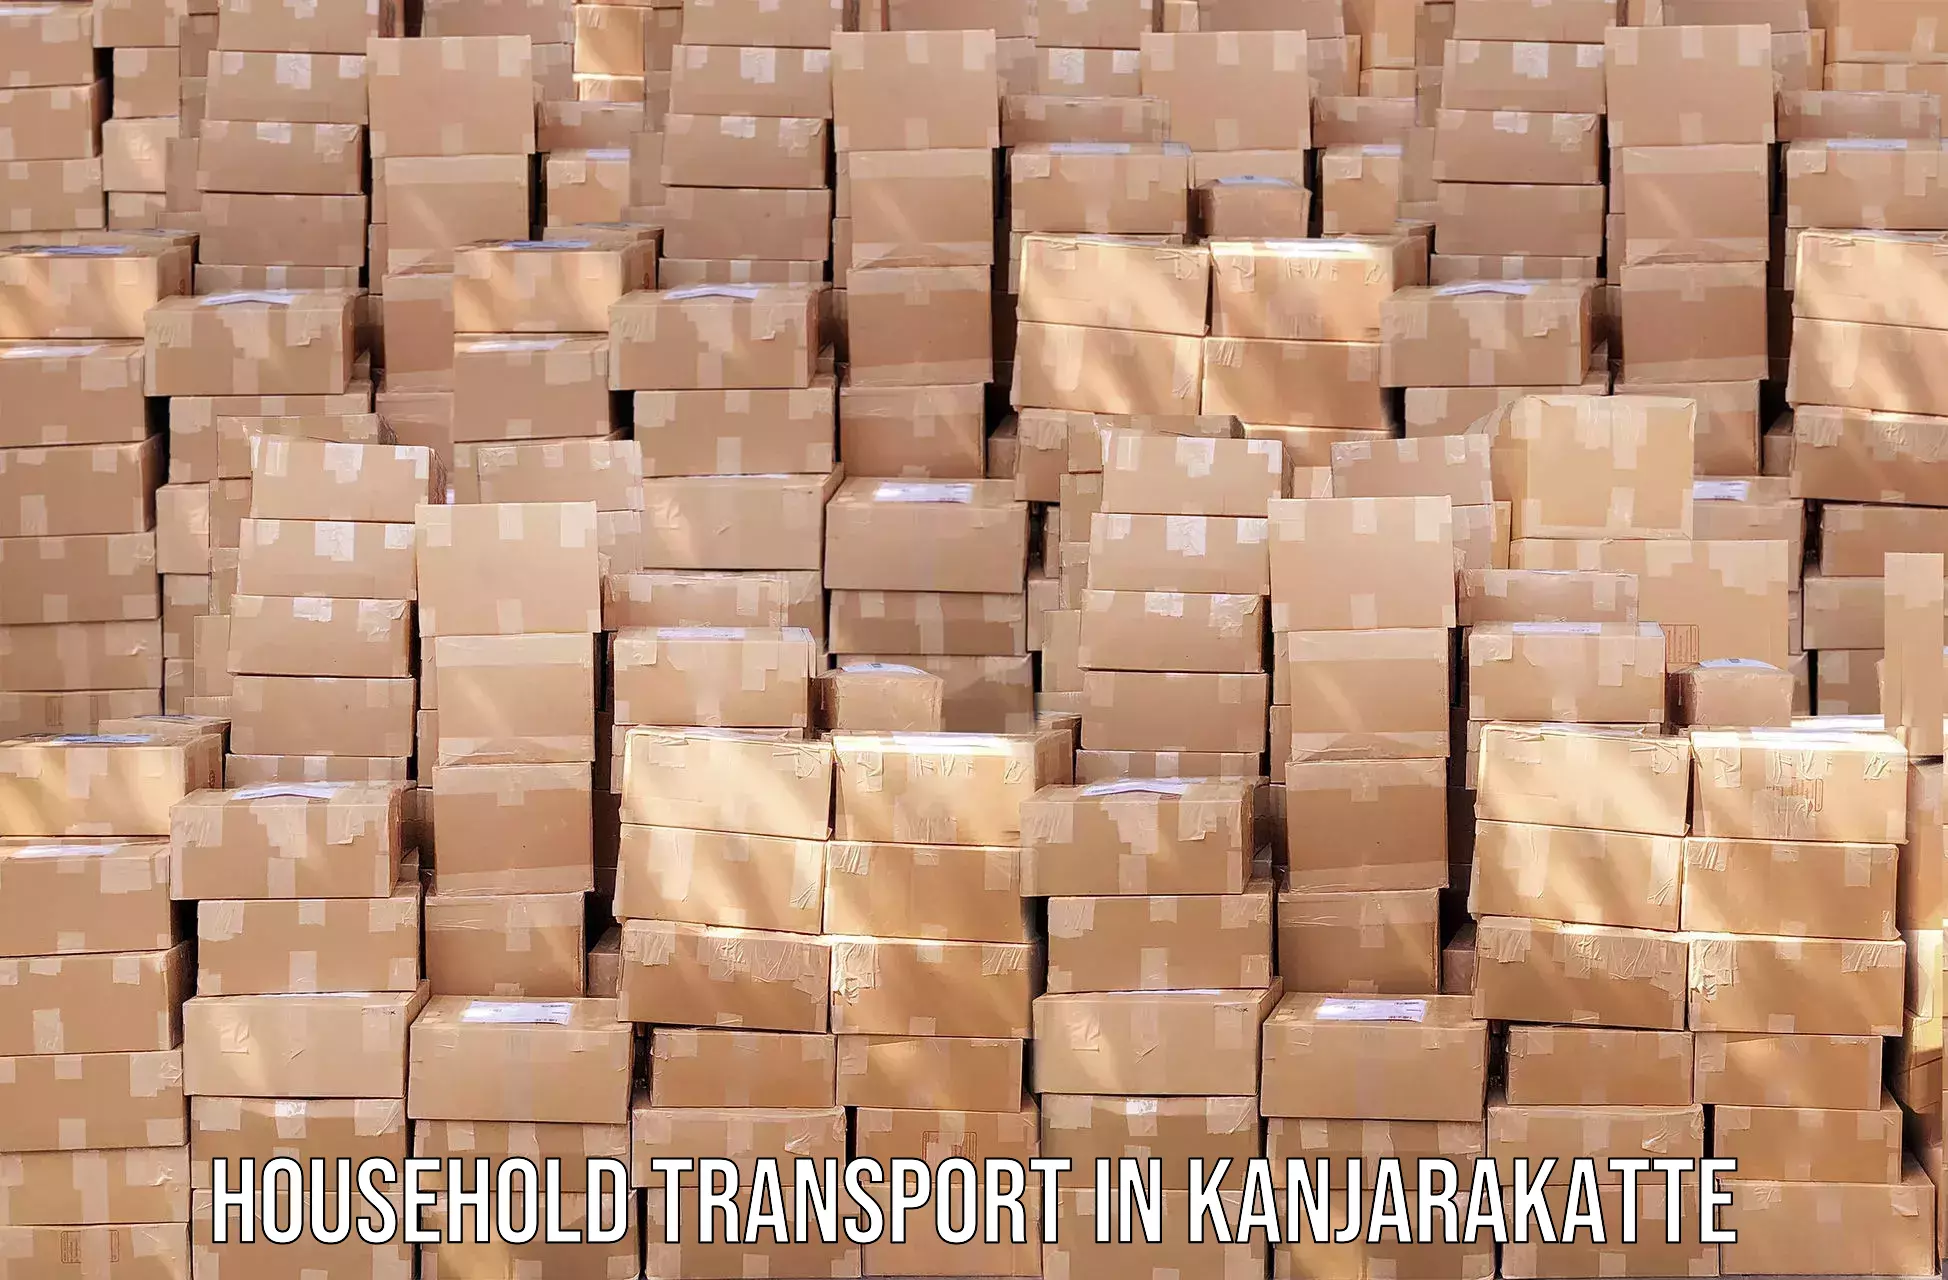 Long-distance household transport in Kanjarakatte